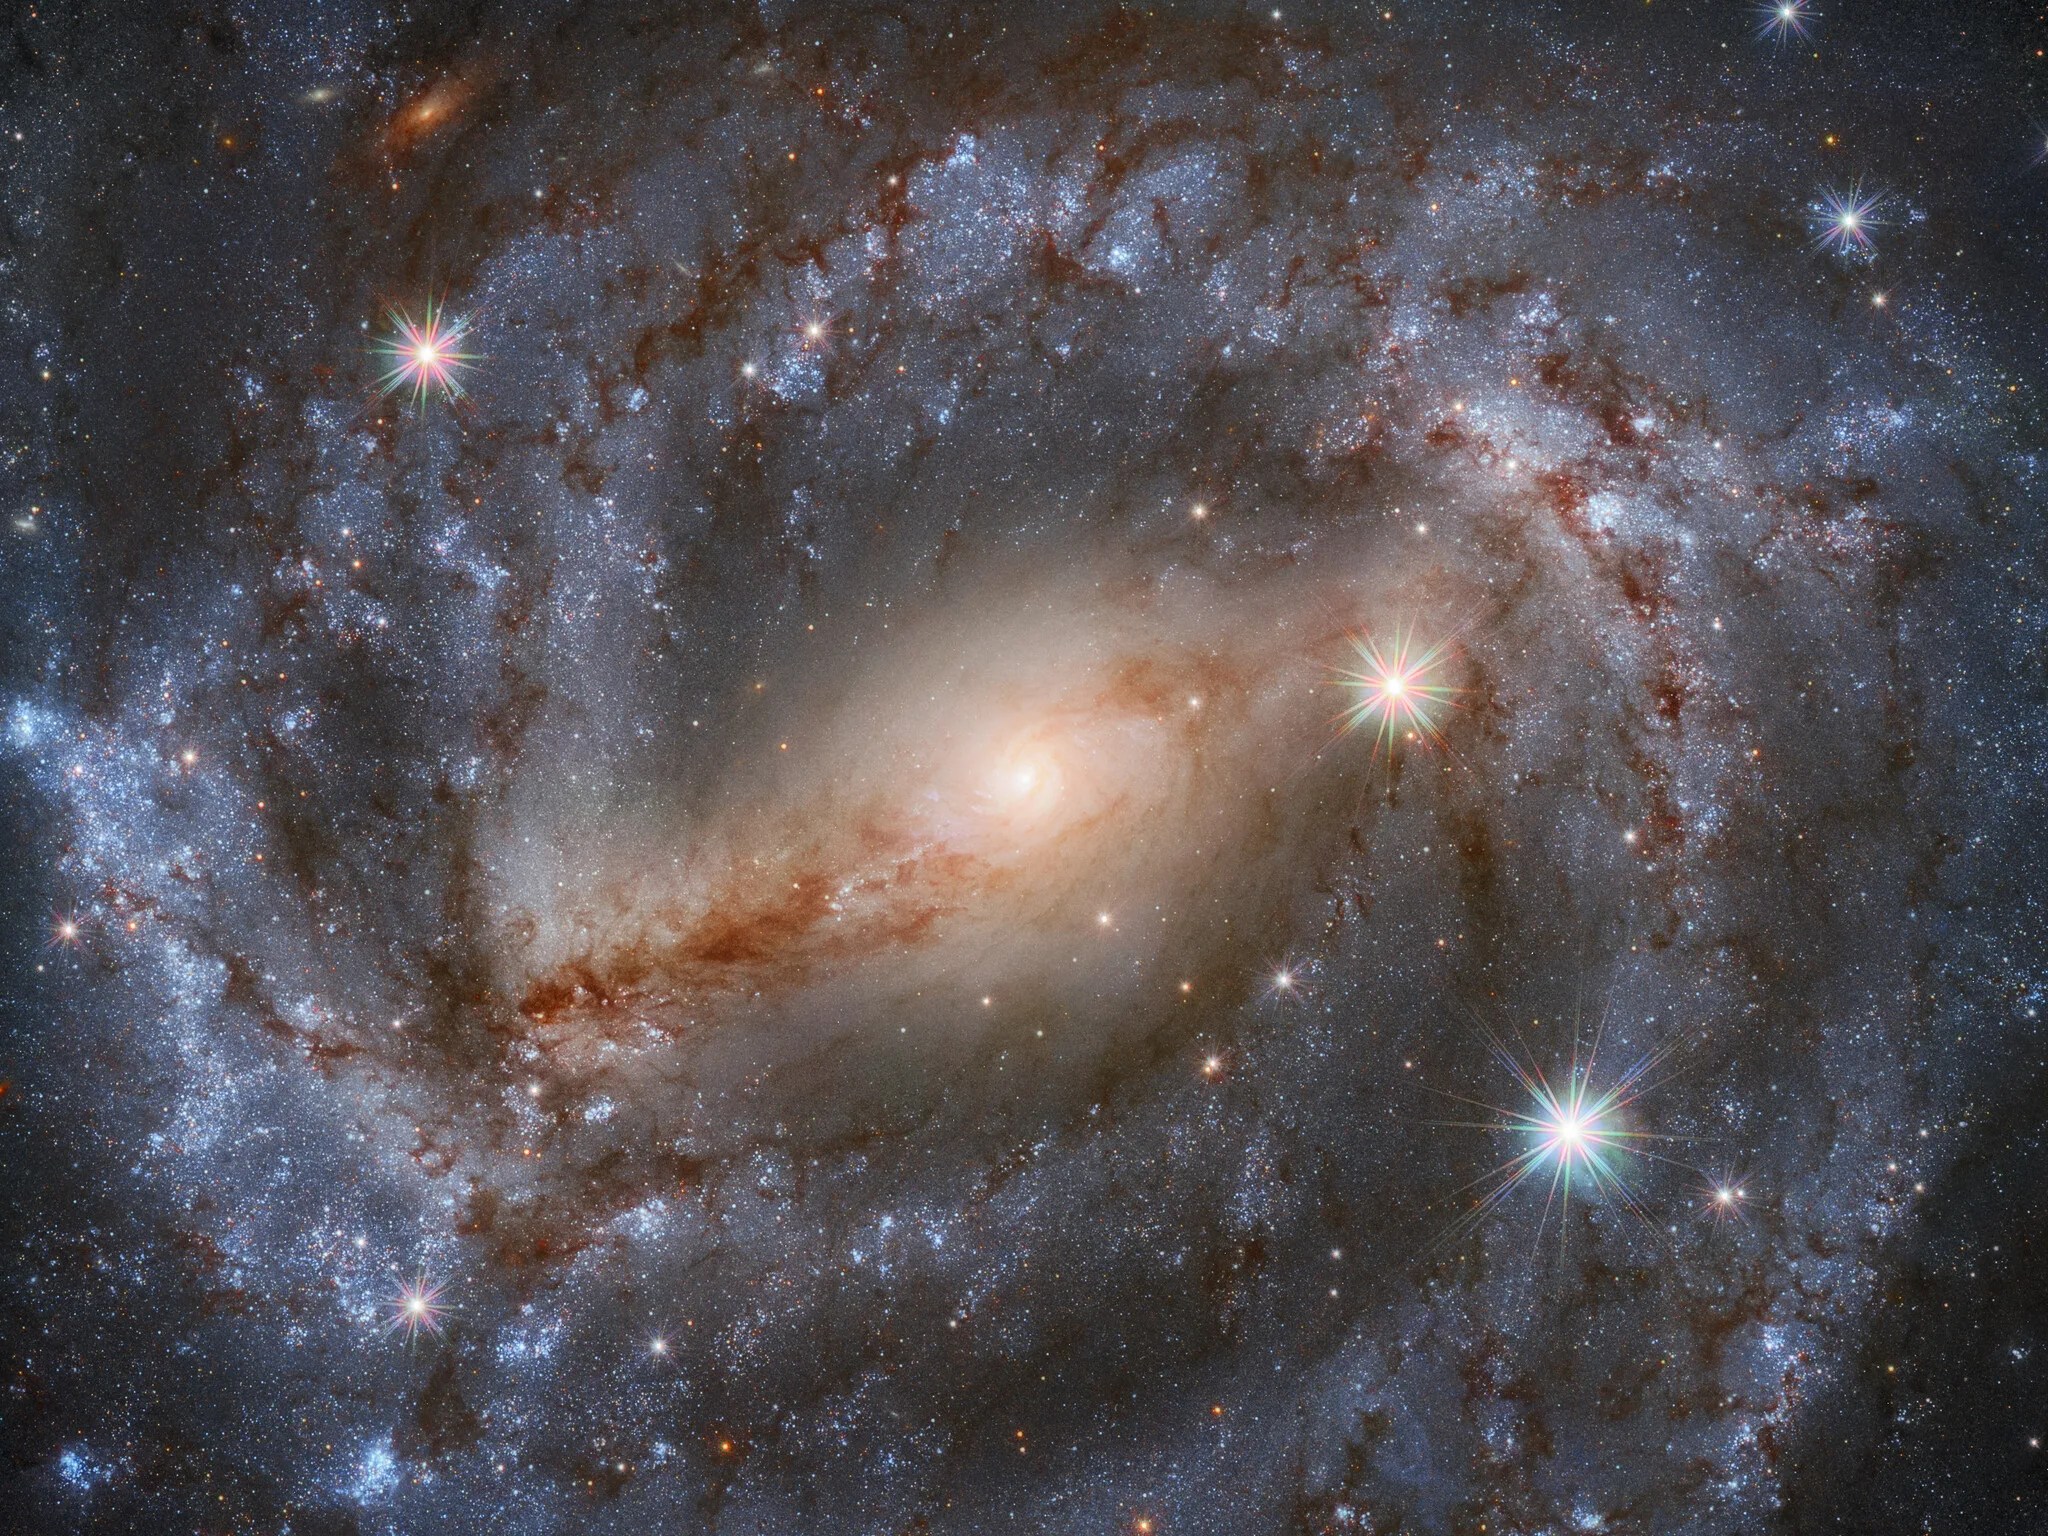 NASA Shares Pic Of Stunning Spiral Galaxy After Supernova Explosion